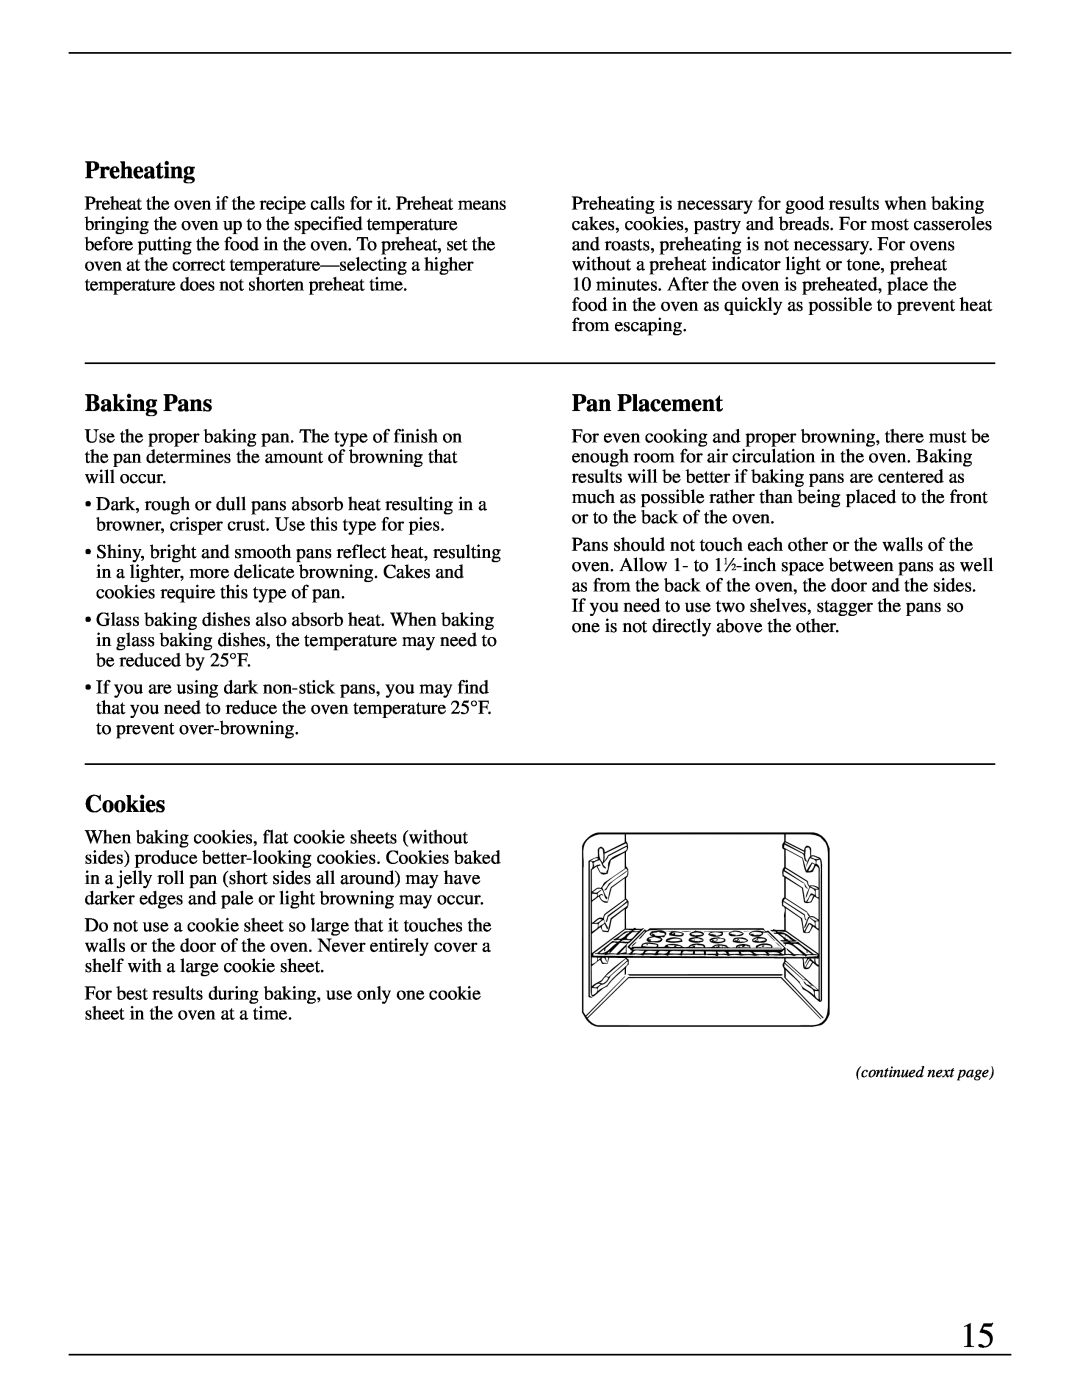 GE Monogram ZEK735 manual Preheating, Baking Pans, Pan Placement, Cookies 